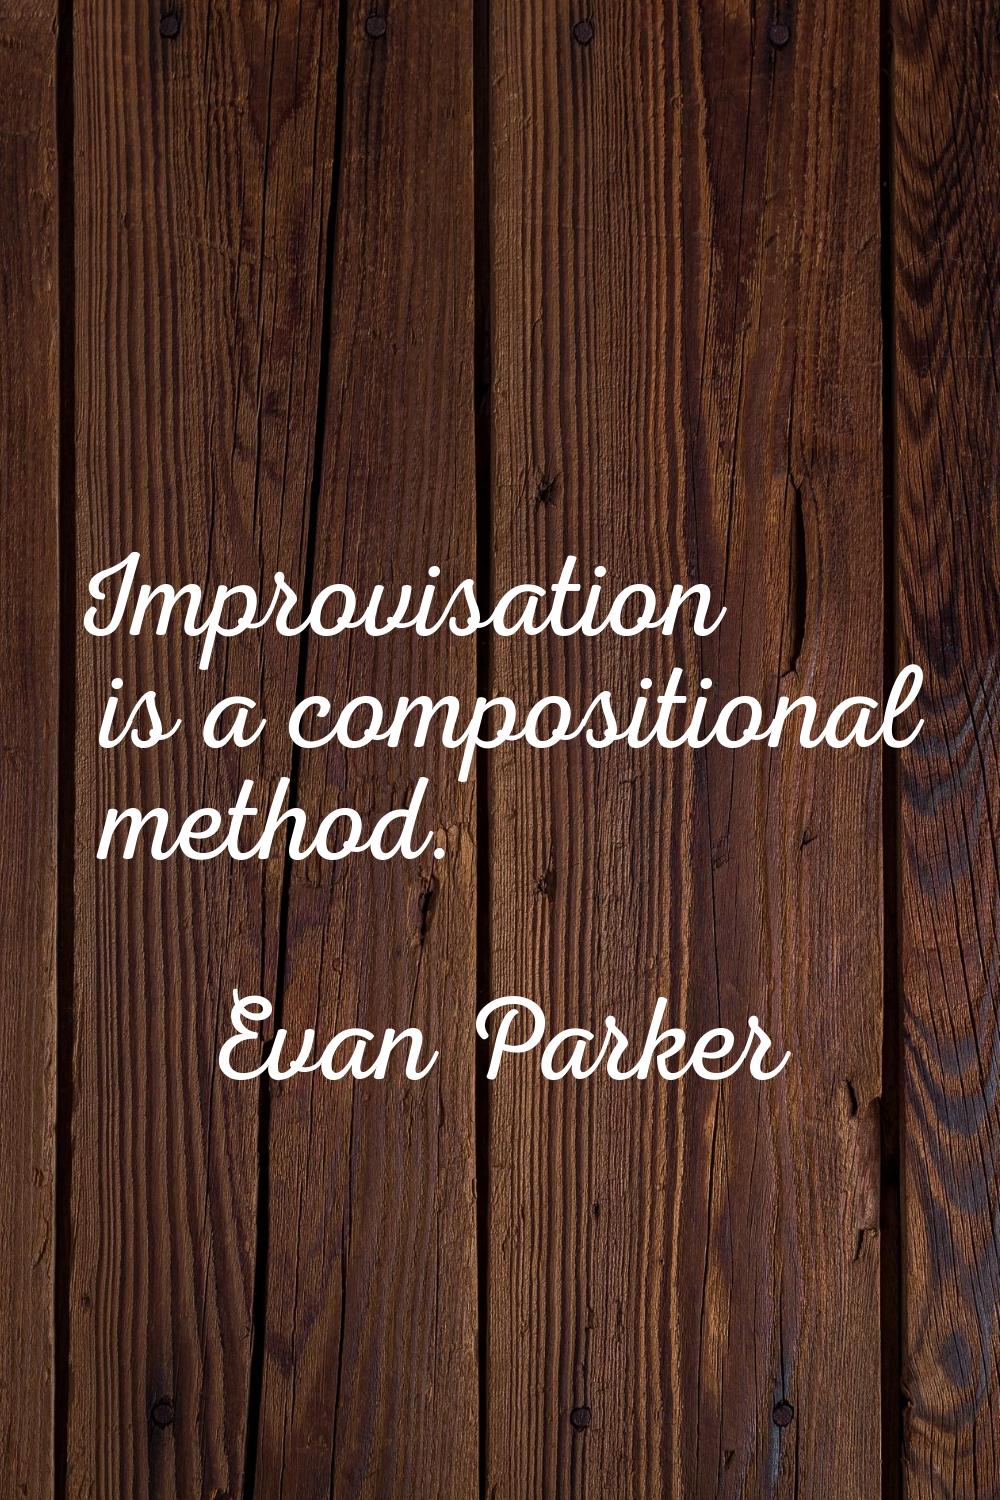 Improvisation is a compositional method.